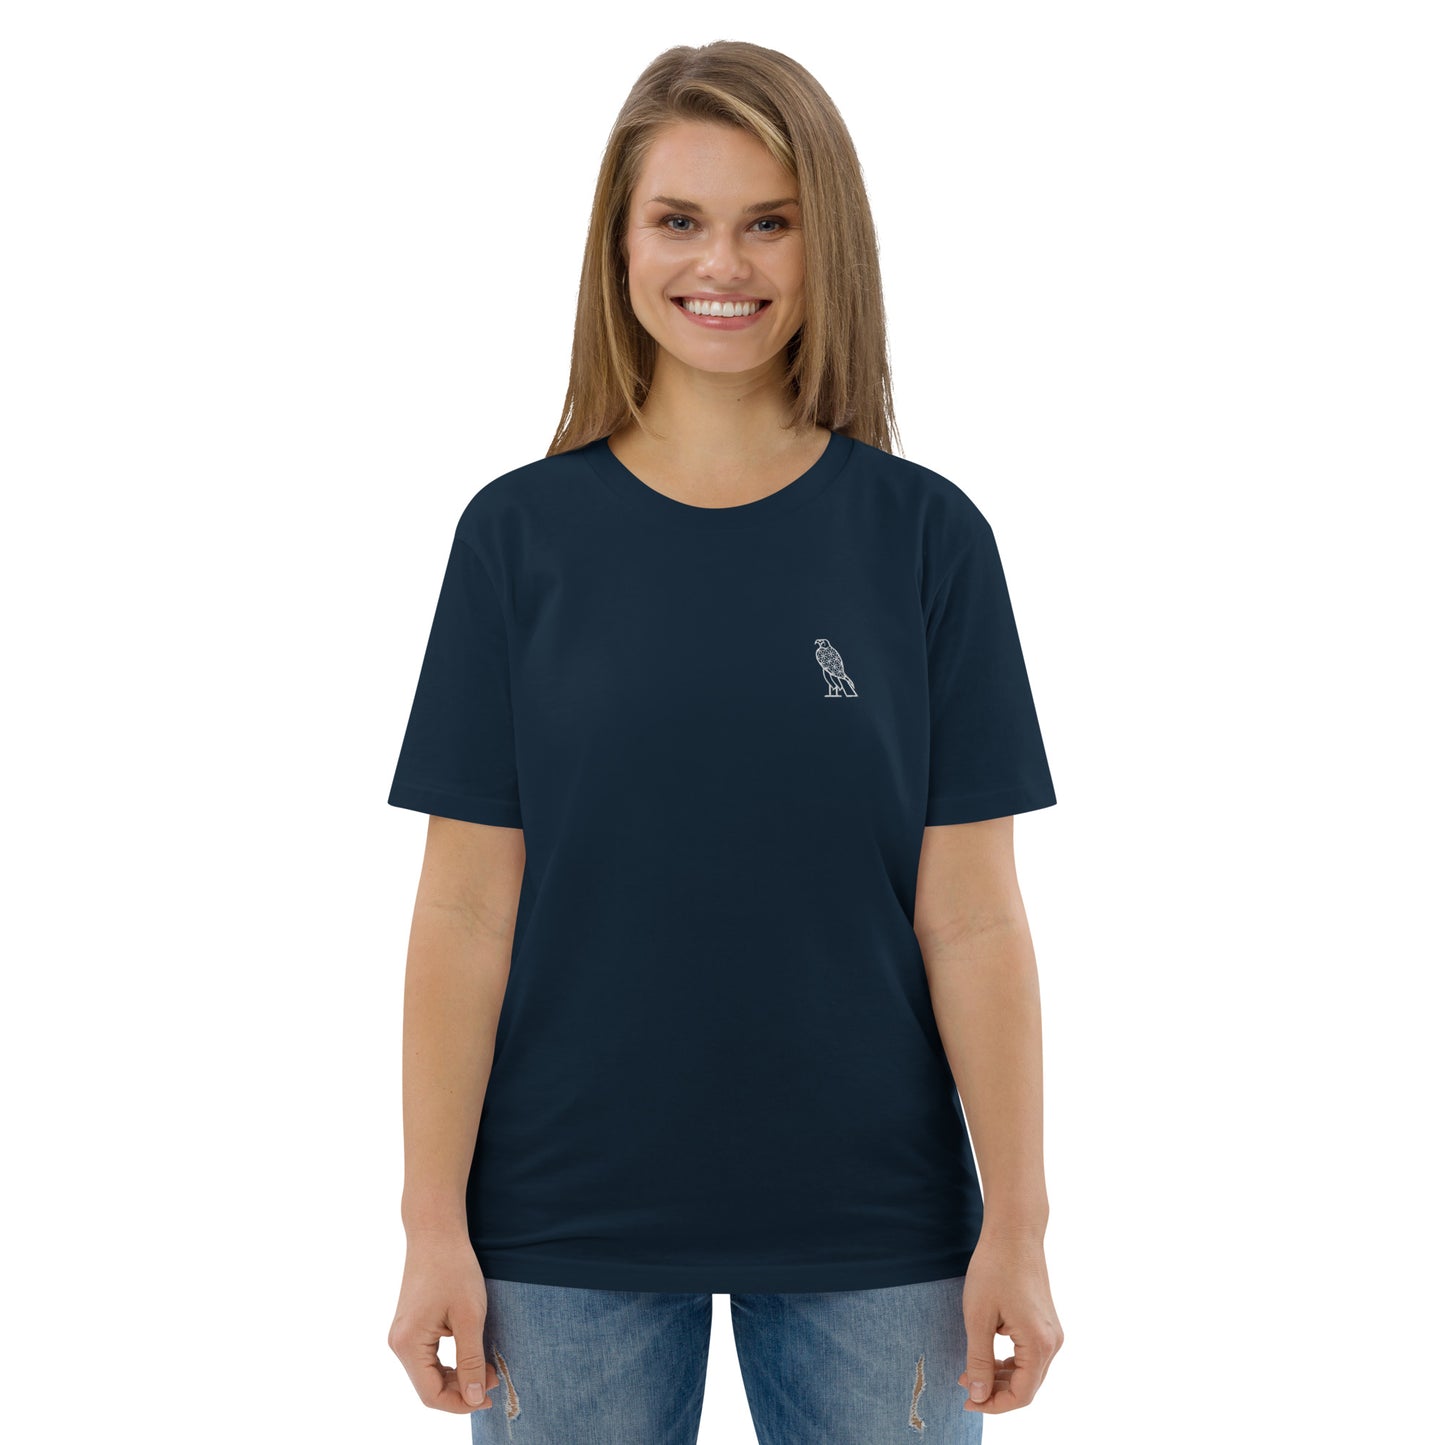 BE HAWK - T-Shirt (unisex, organic cotton)